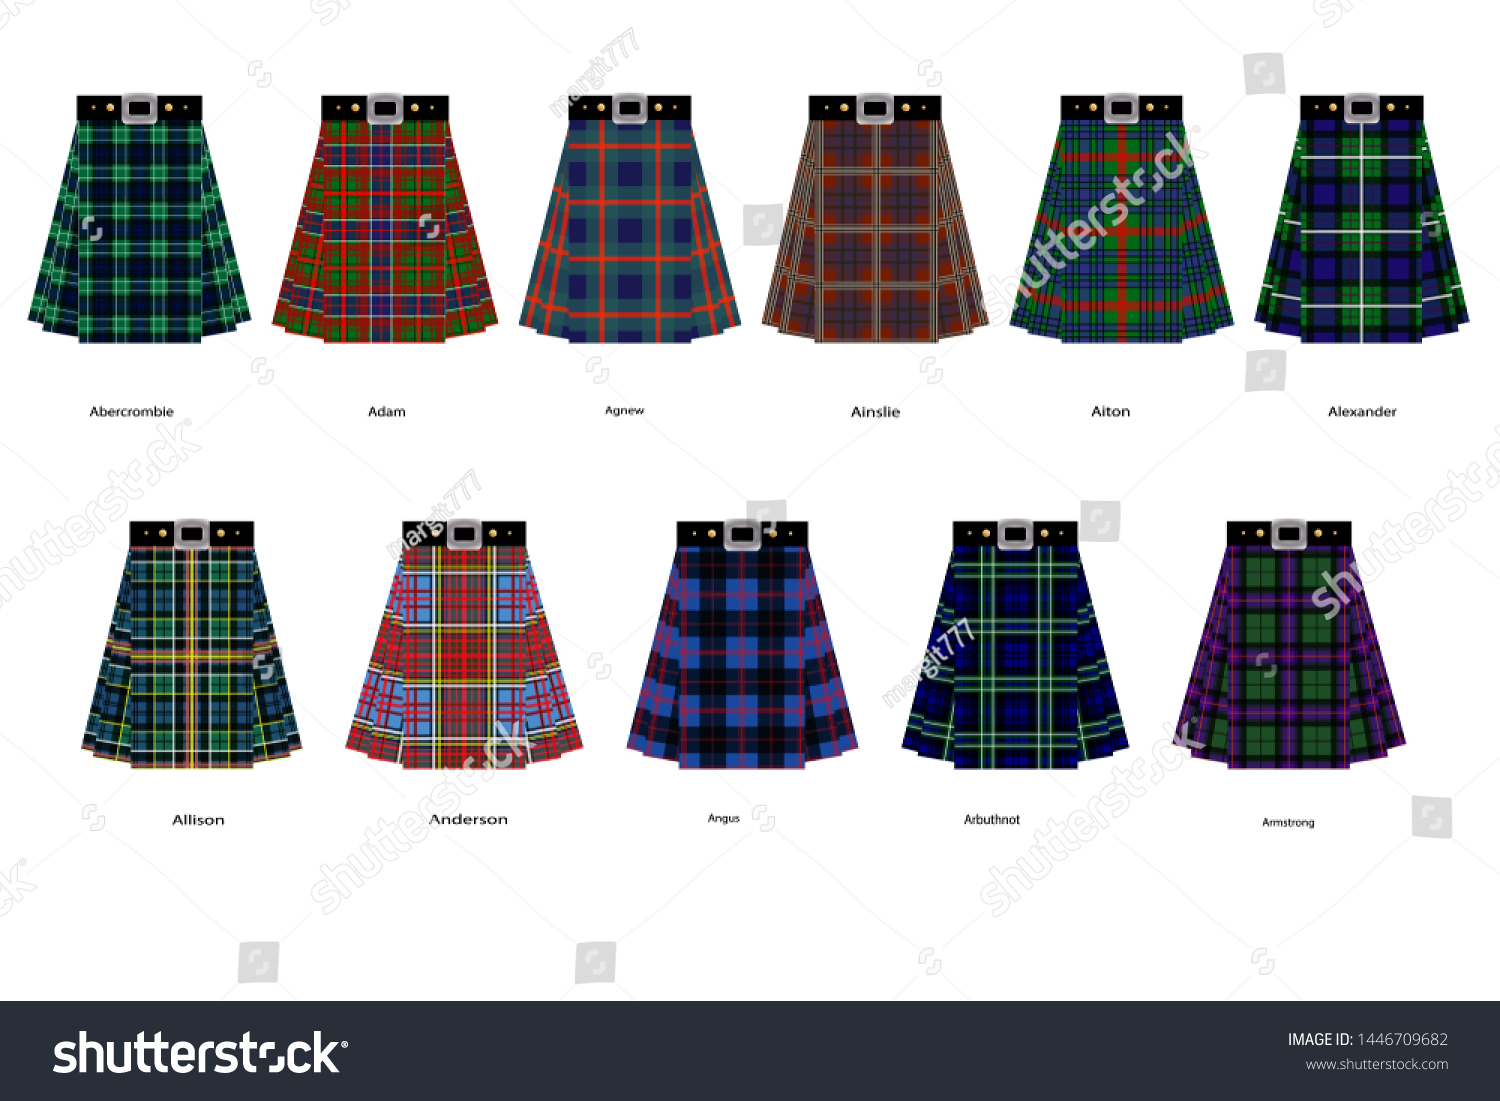 26 374 Scottish skirt Images Stock Photos Vectors Shutterstock